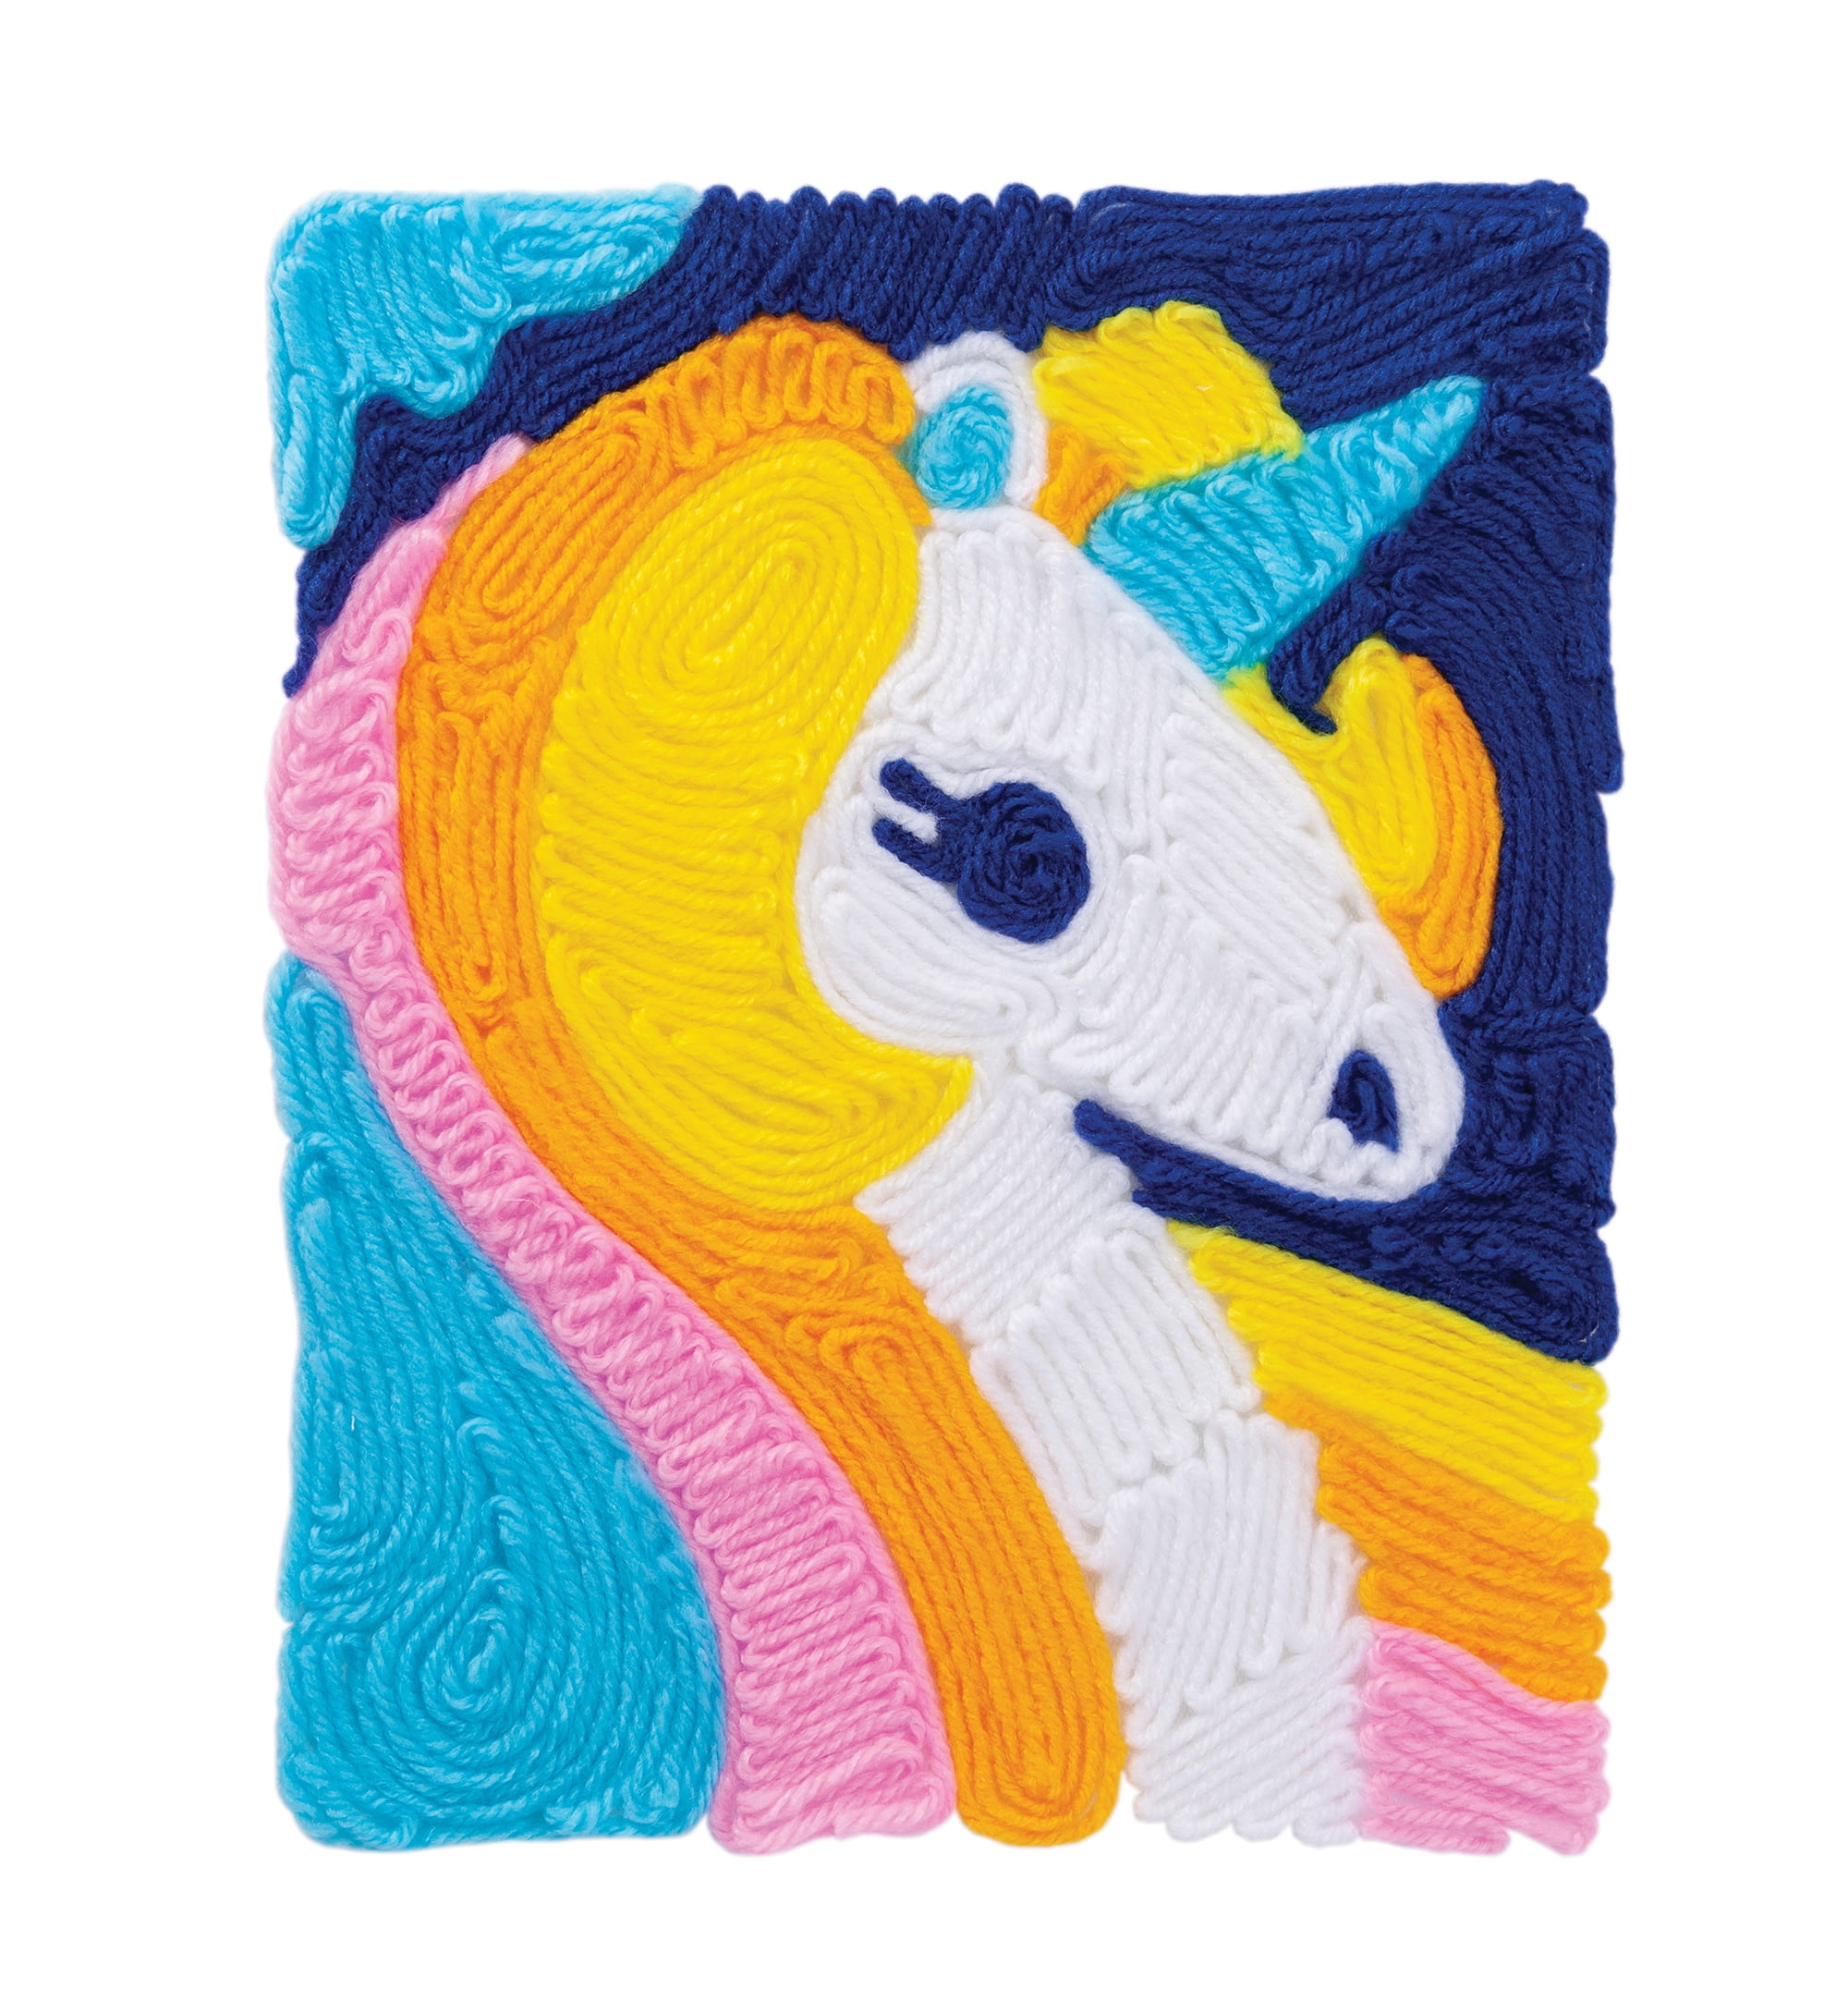 Unicorn Composition & Drawing Notebook – Mr. Mintz Crafts